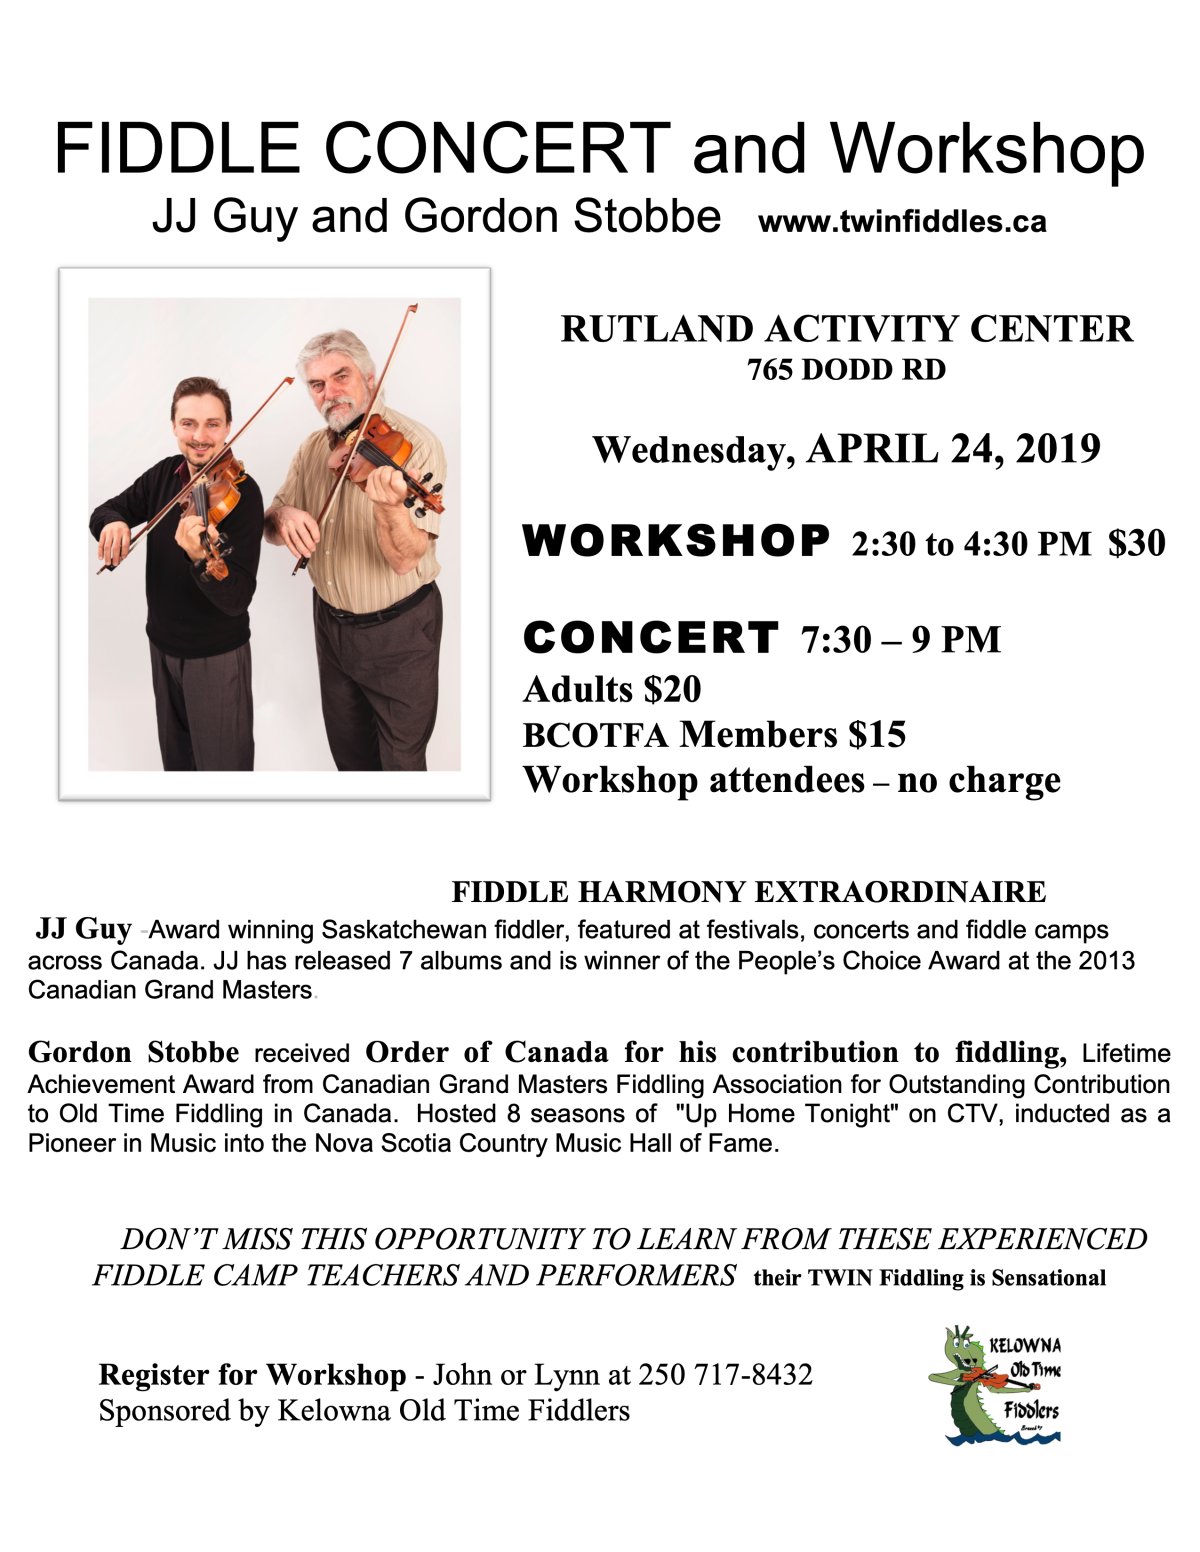 Gordon Stobbe and JJ Guy Concert and Workshops - image